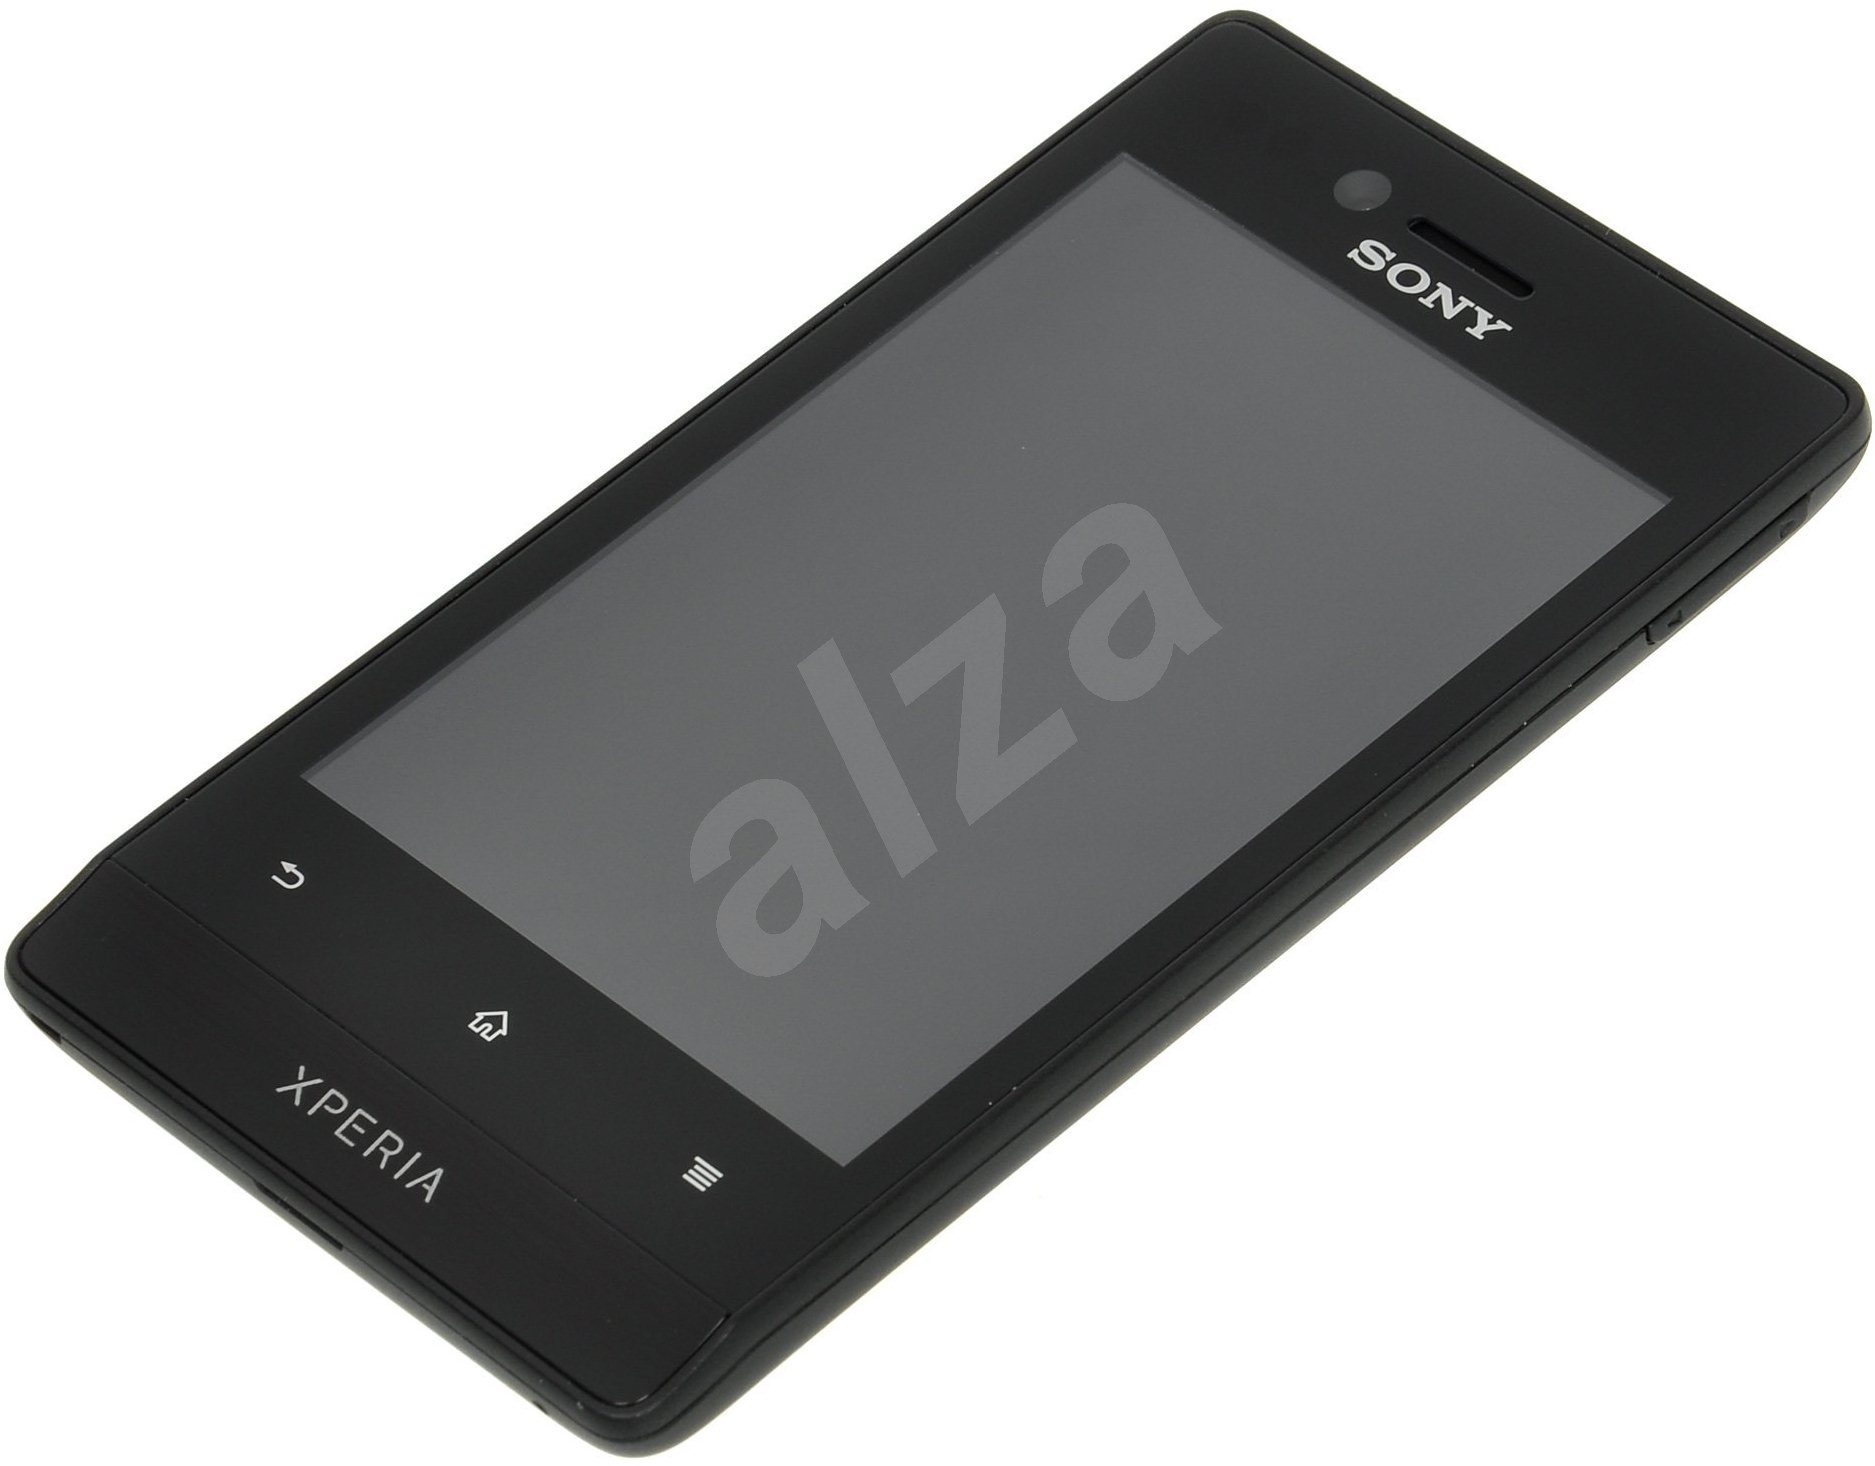 Sony Xperia Miro (ST23i) Black - Mobilní telefon | Alza.cz